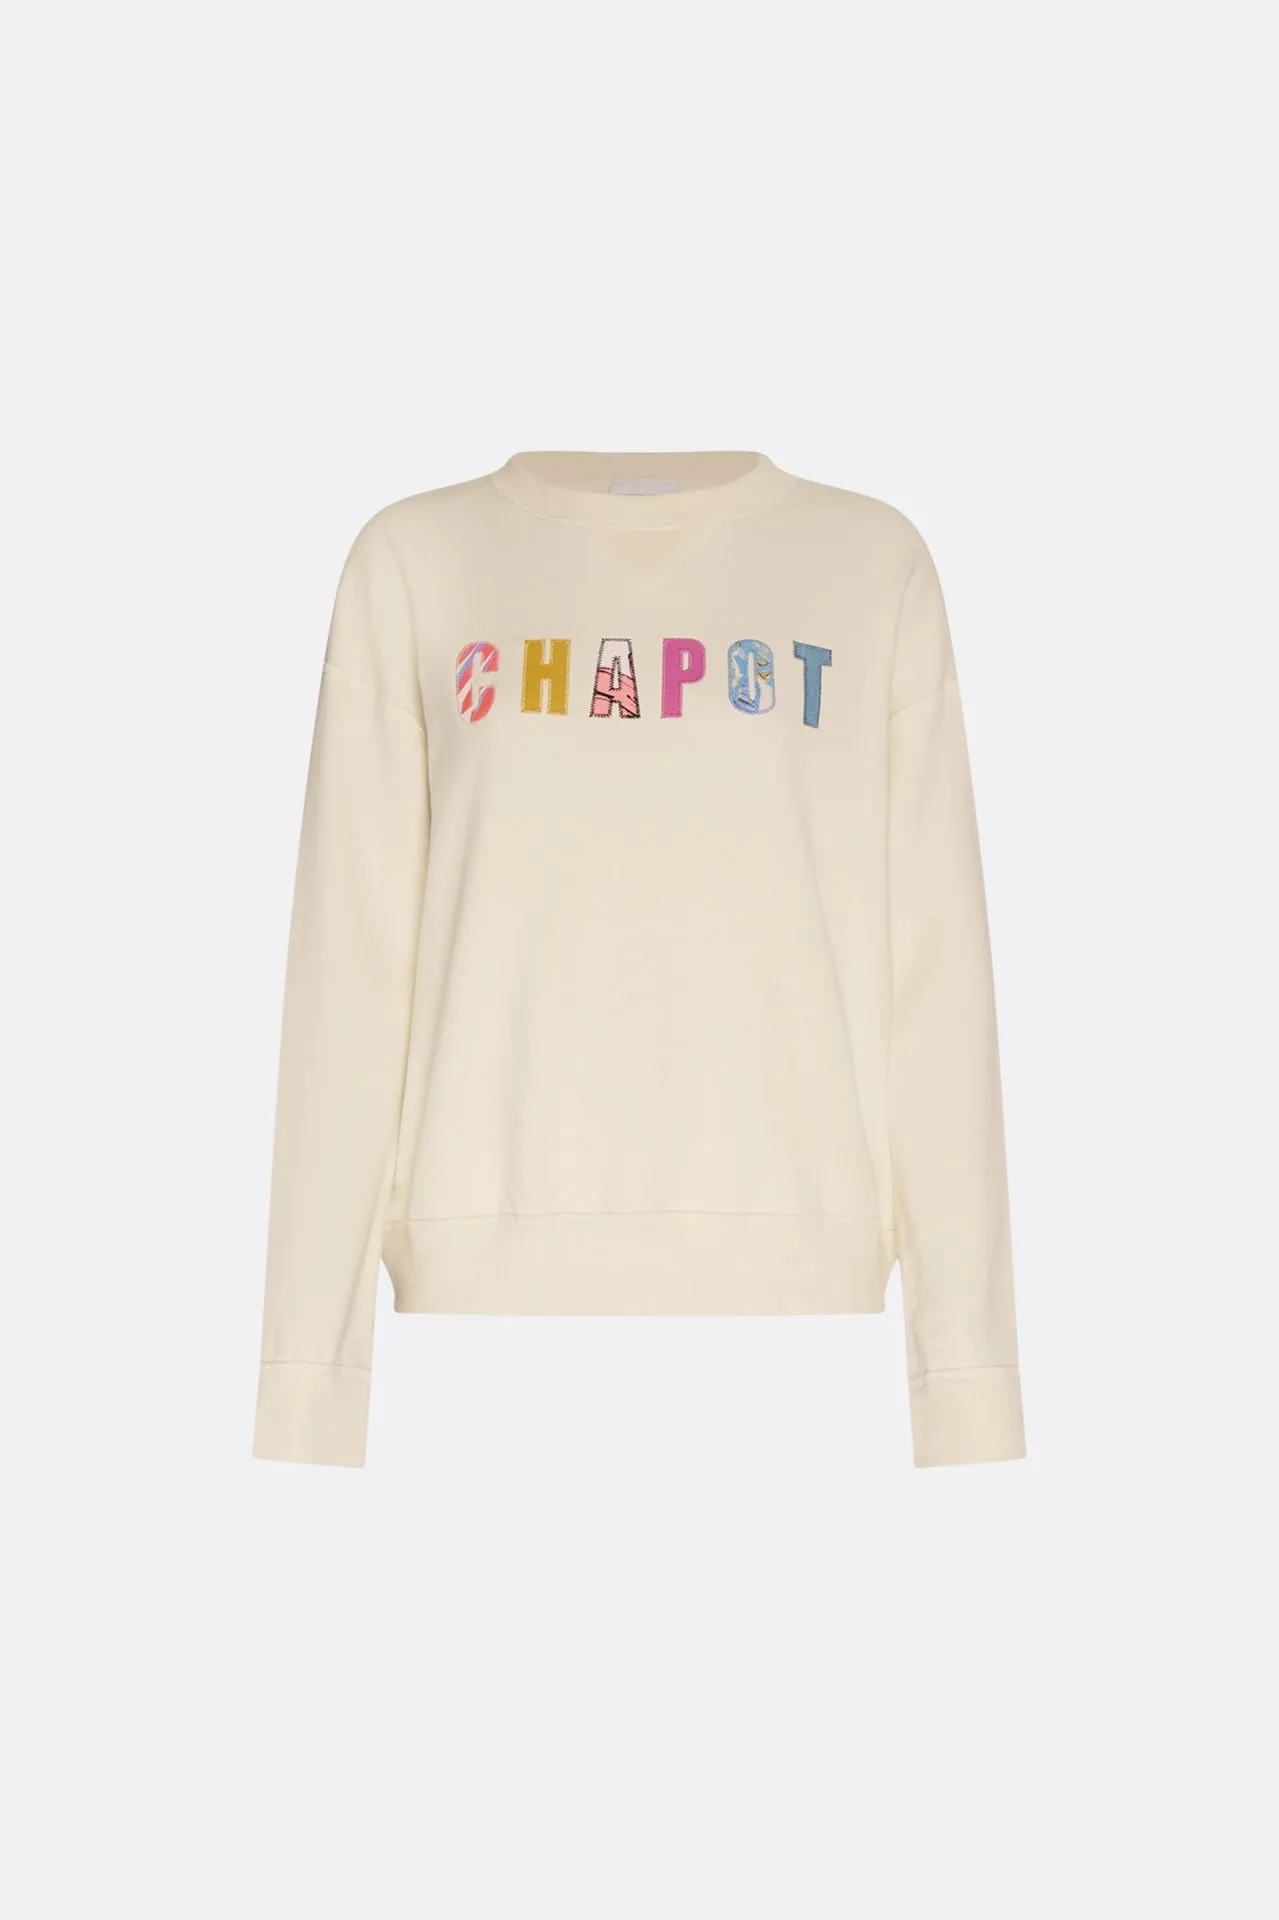 FABIENNE CHAPOT Chapot sweater